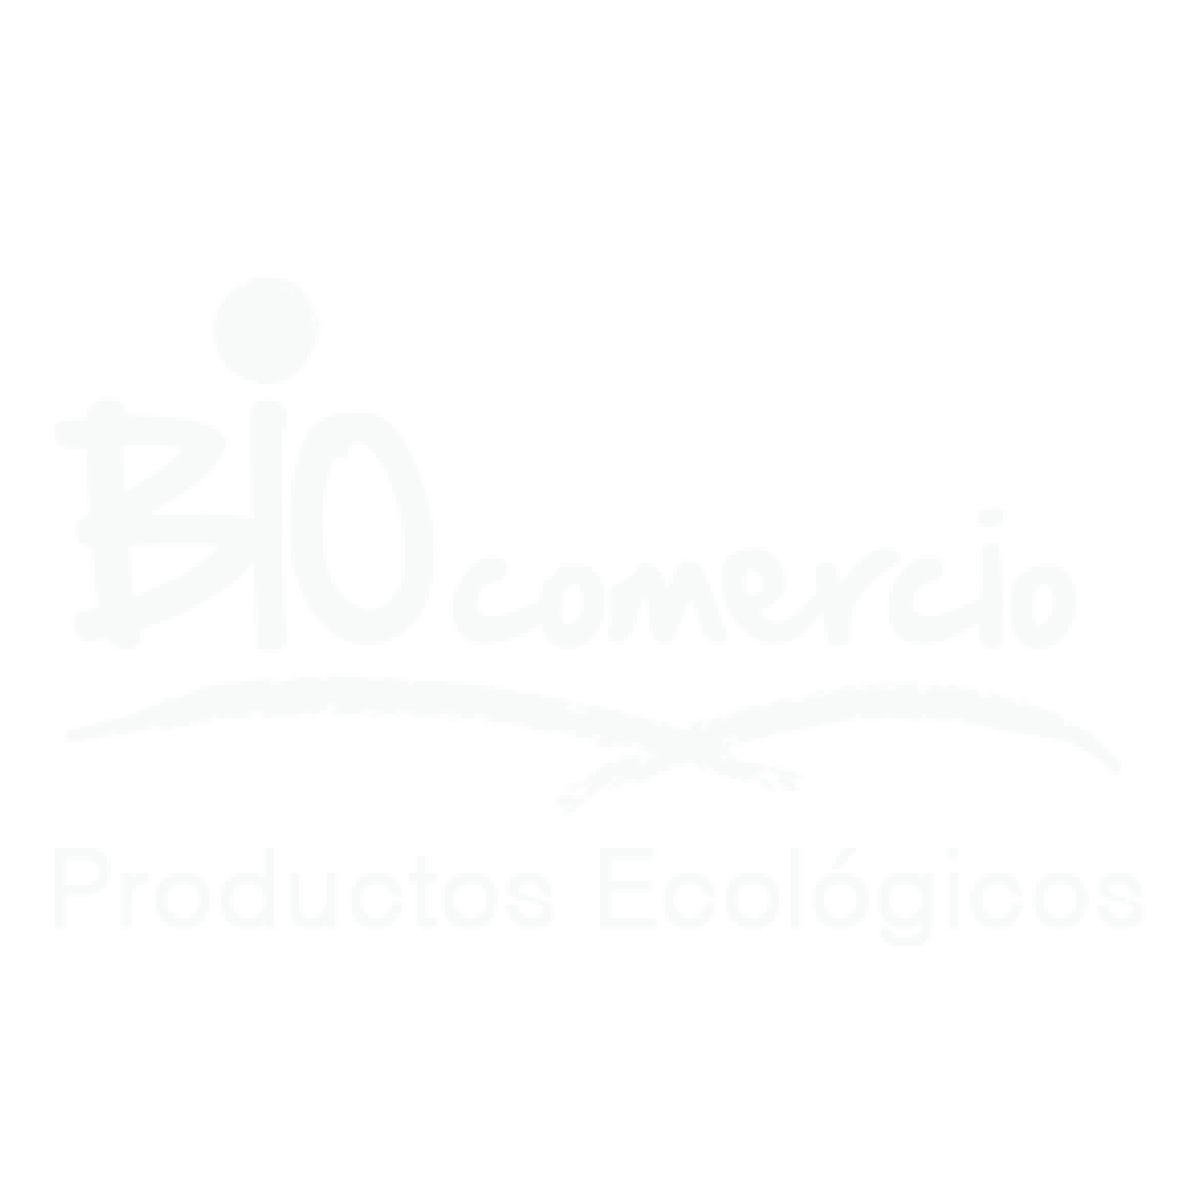 Biocomercio company logo